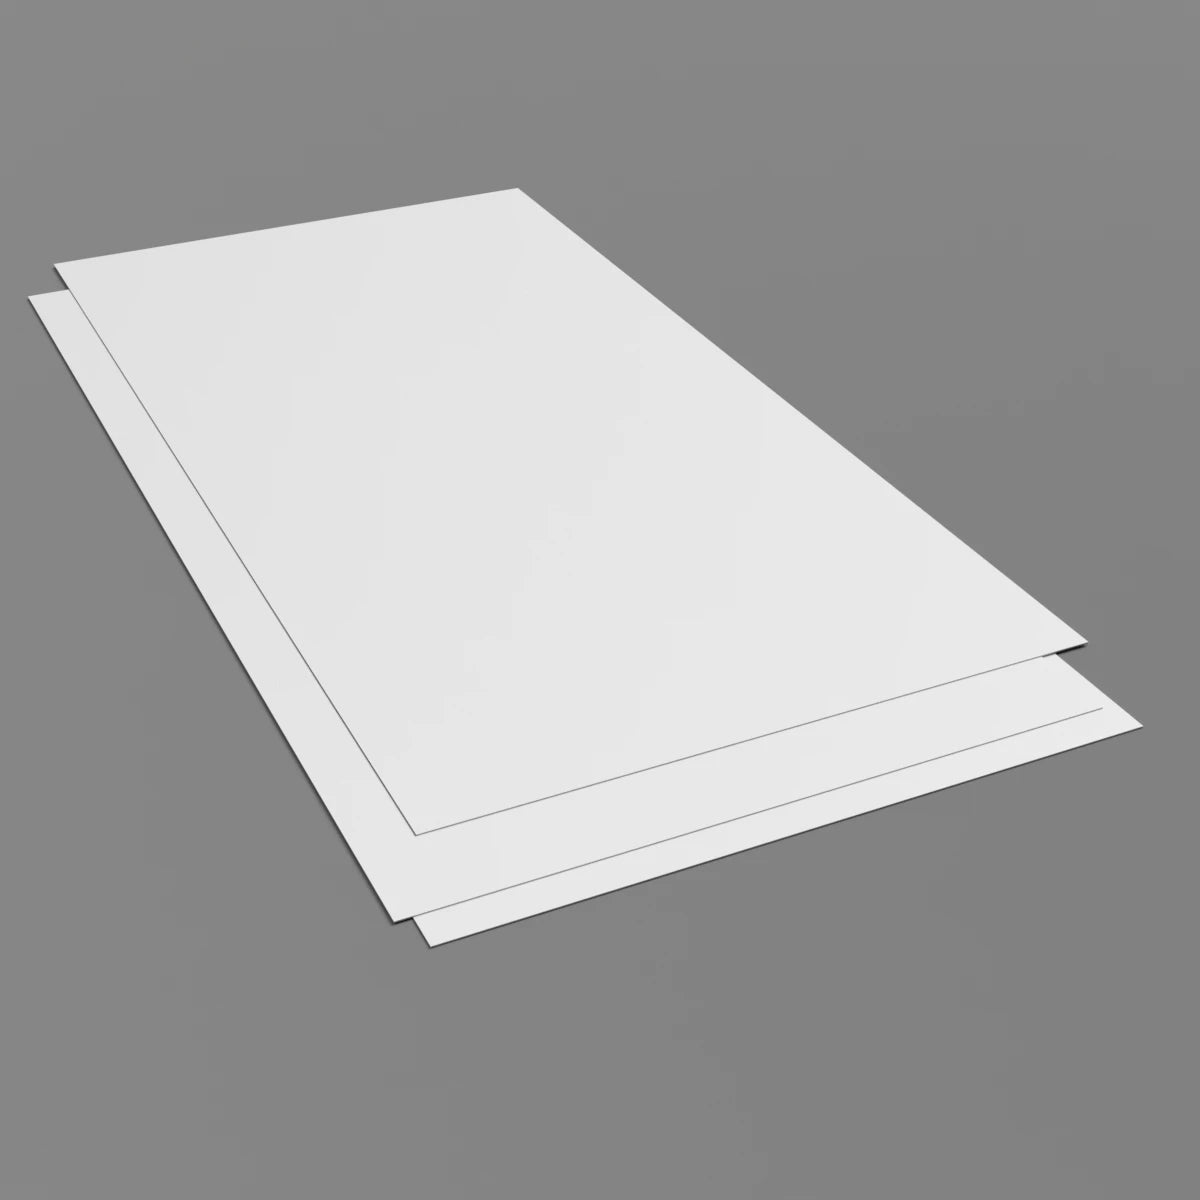 2.5mm Premium White Hygienic Wall Cladding Sheet